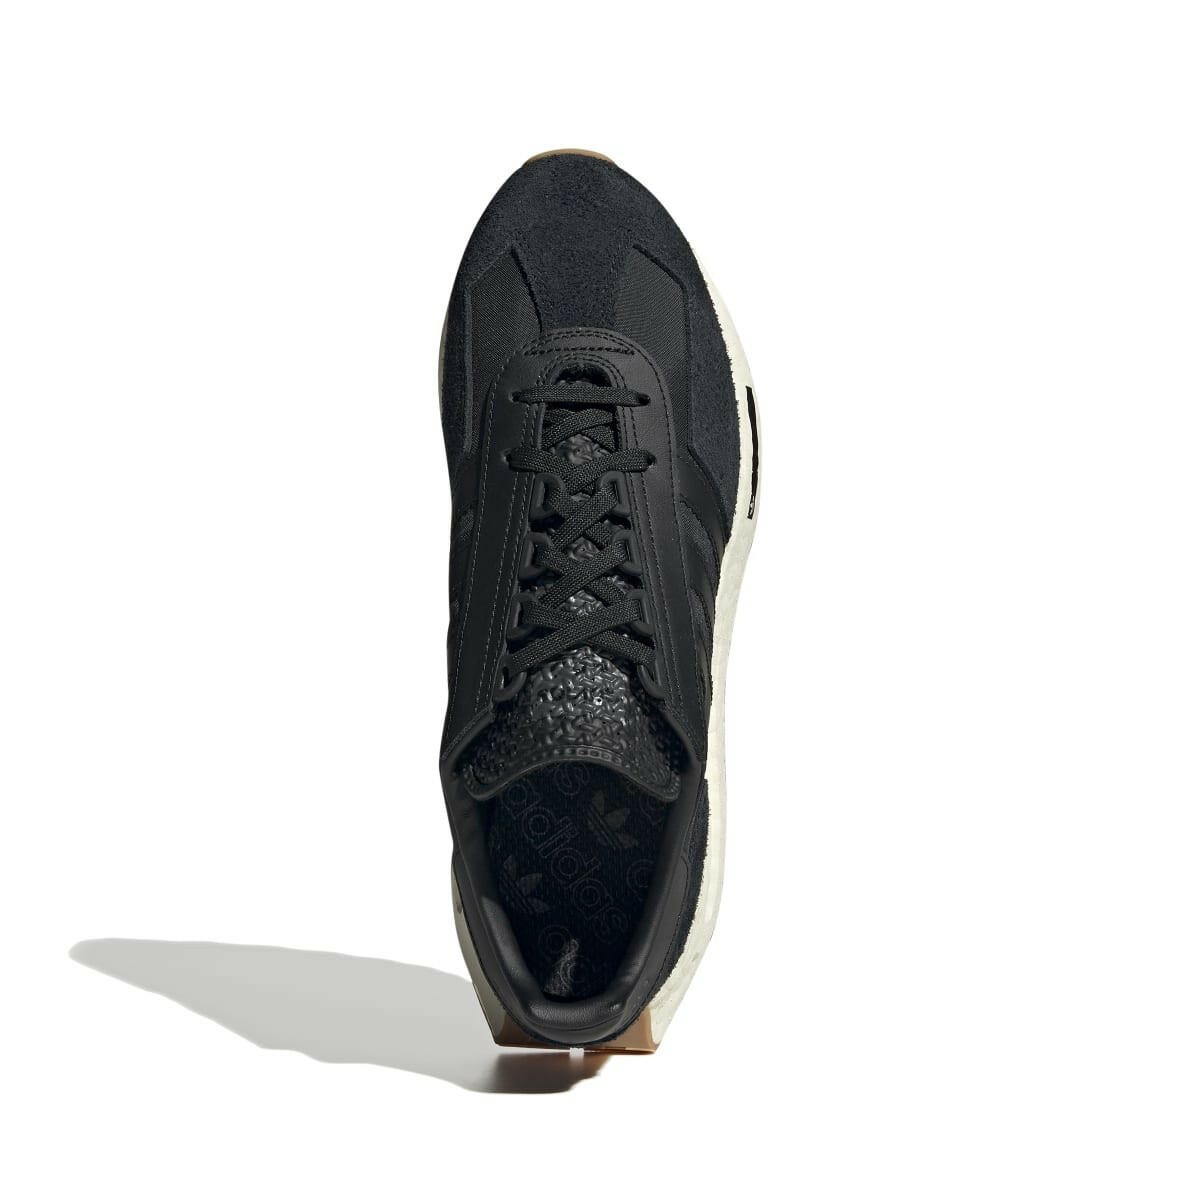 ADIDAS H03080 RETROPY E5 MN'S (Medium) Black/Black/Gray Textile & Suede Running Shoes - GENUINE AUTHENTIC BRAND LLC  